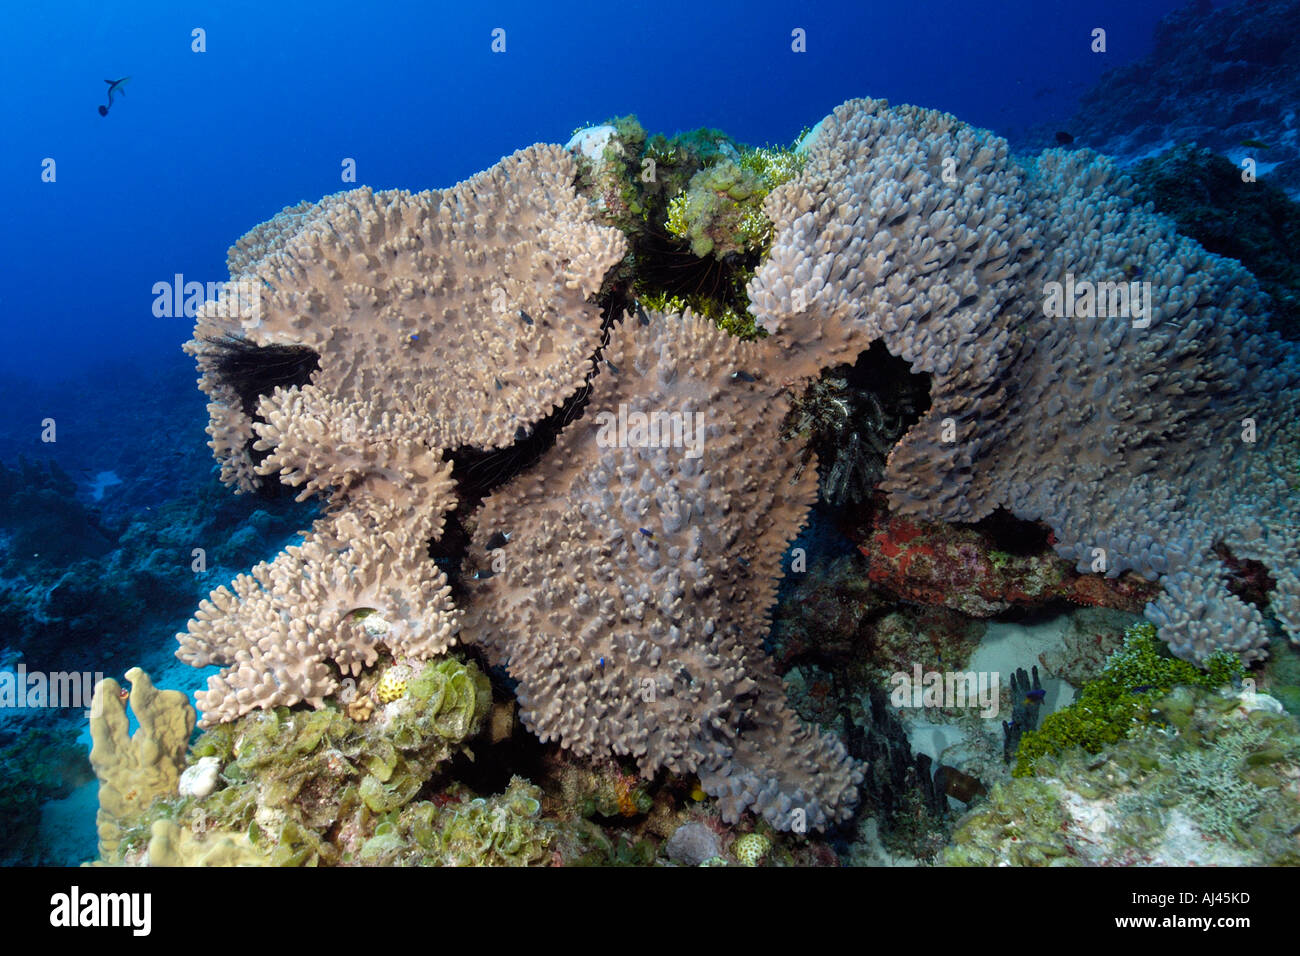 Leather coral Lobophytum sp Ailuk atol Marshall Islands Pacific Ocean Stock Photo